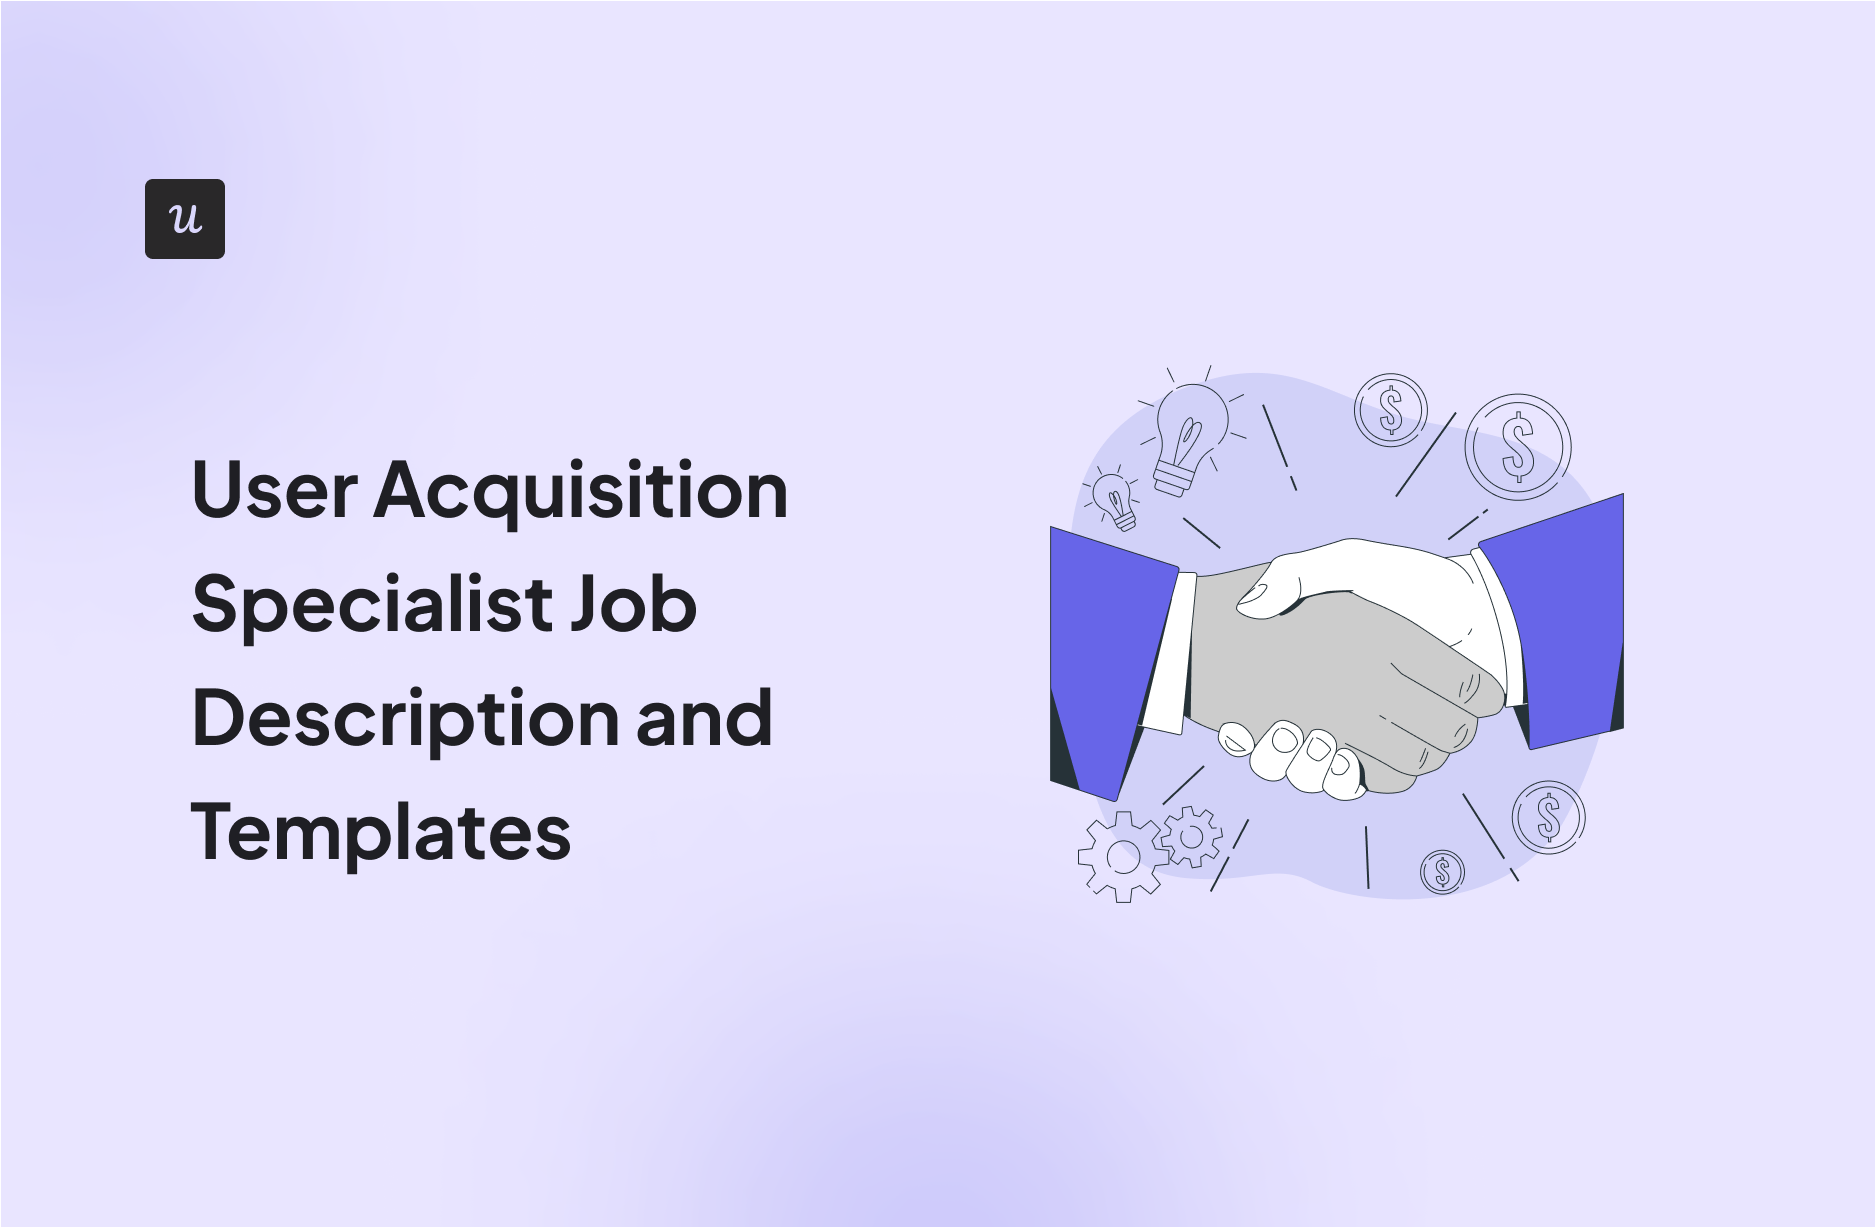 User Acquisition Specialist Job Description and Templates